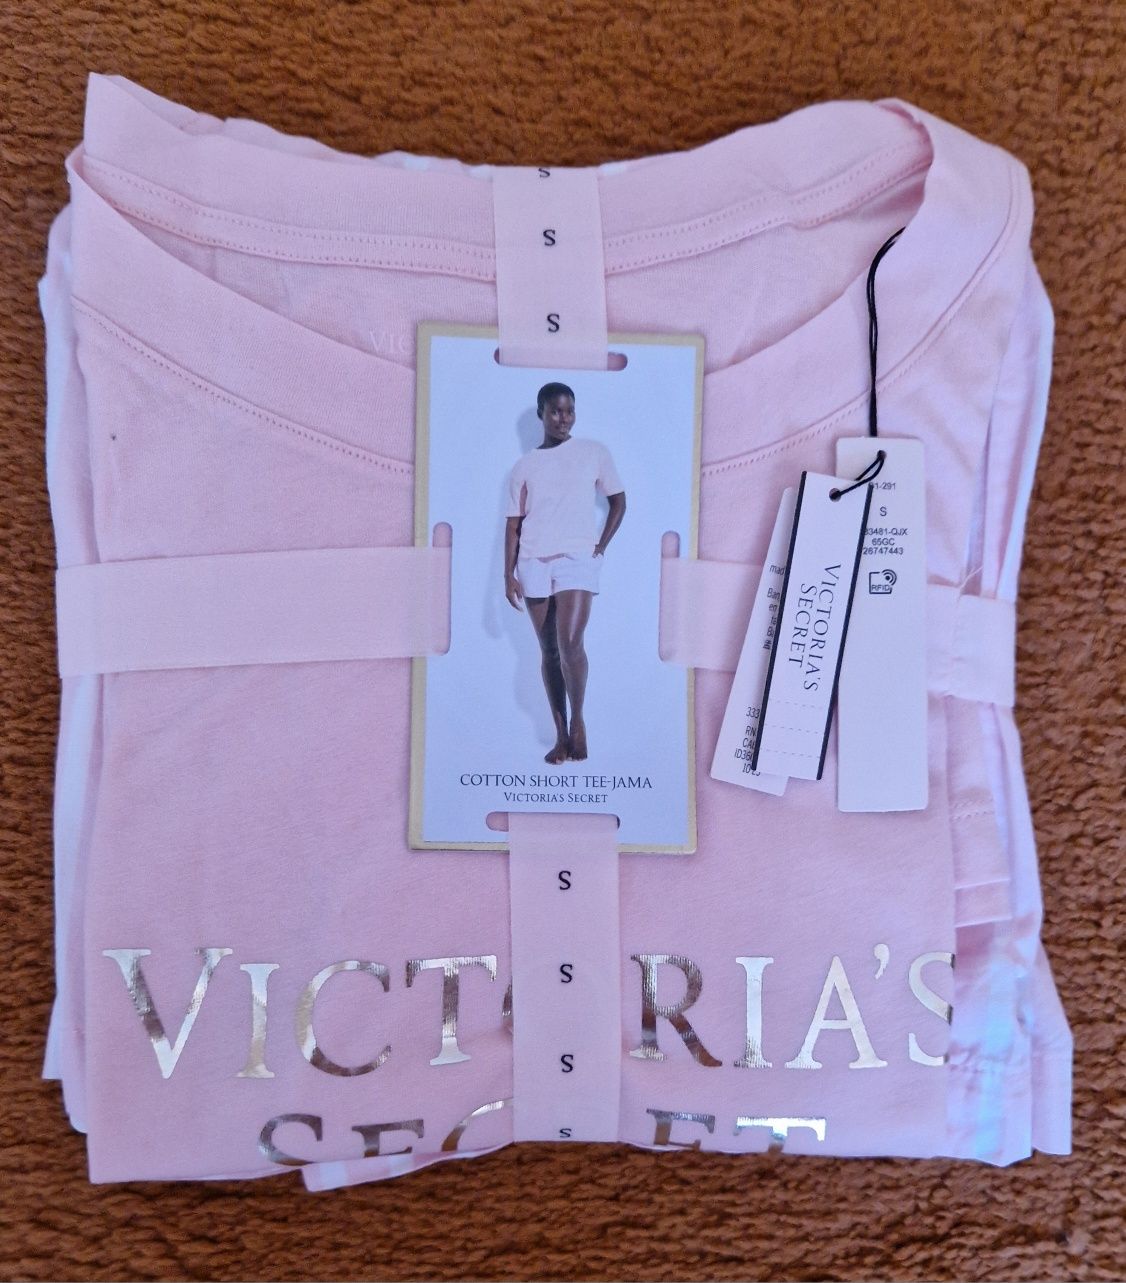 Піжама Victoria's Secret. Розмір S.